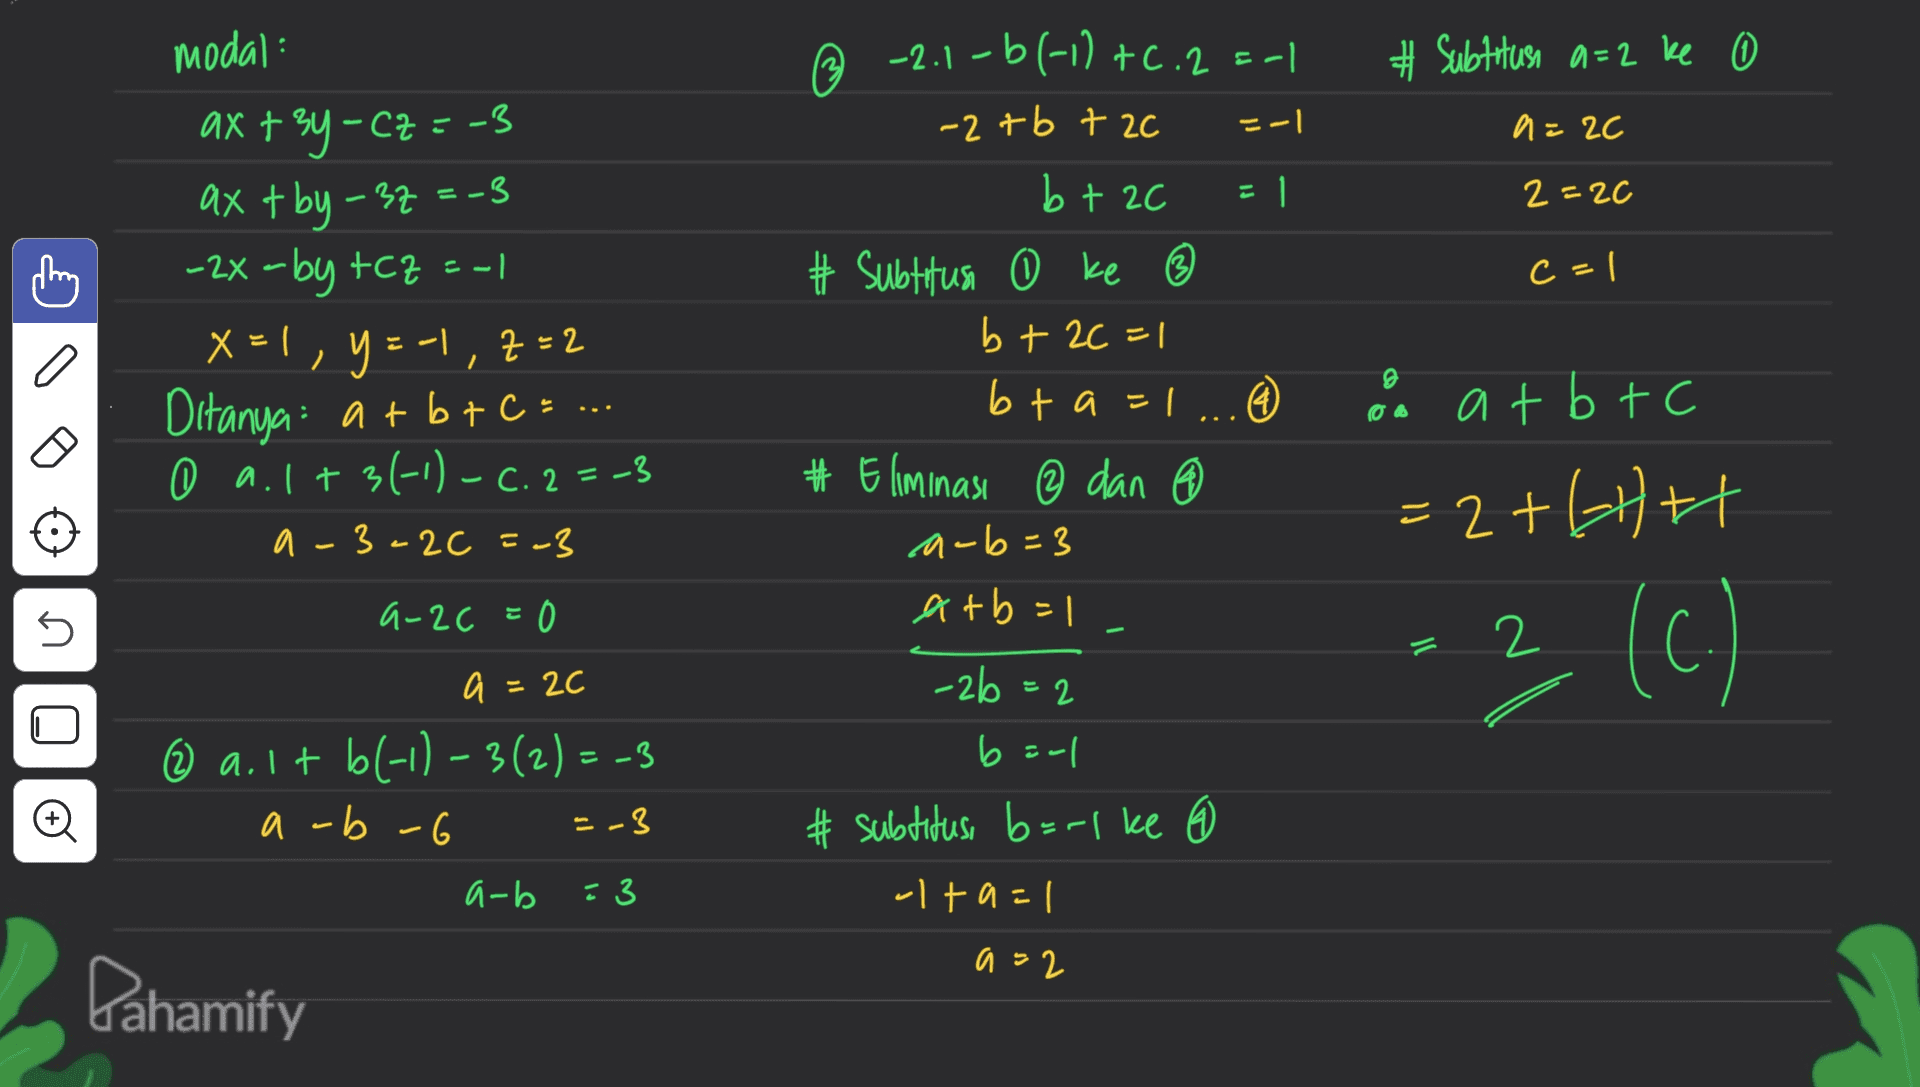 # Subtitusi a=2 ke 0 ニー」 a = 2C il 2=20 c=1 modal: ax+ 3y - Cz=-3 axt by - 32=-3 -2x -by +CZ --1 X= !, Y = -1, Z=2 Ditanya: a +b+c... 0 a. 1+3(-1)-(. 2=-3 a-3-2c =-3 © -2.1-6(-1) +0.2 =-| -2+b +2c b + 20 1 # Subtitusa 0 ke © b + 2C =1 bta=1 @ #Eliminasi ② dan ③ a-b=3 atb=1 a Z2 0 o atbtc =2+t И 5 a-26 = 0 = 2 2 (C.) -2b =2 a = 20 a ① a.lt bl-11-3(2)=-3 a-b-6 barl # subtitus, b=r1 ke 6 Đ =-3 a-b : 3 alta=1 a=2 Dahamify 